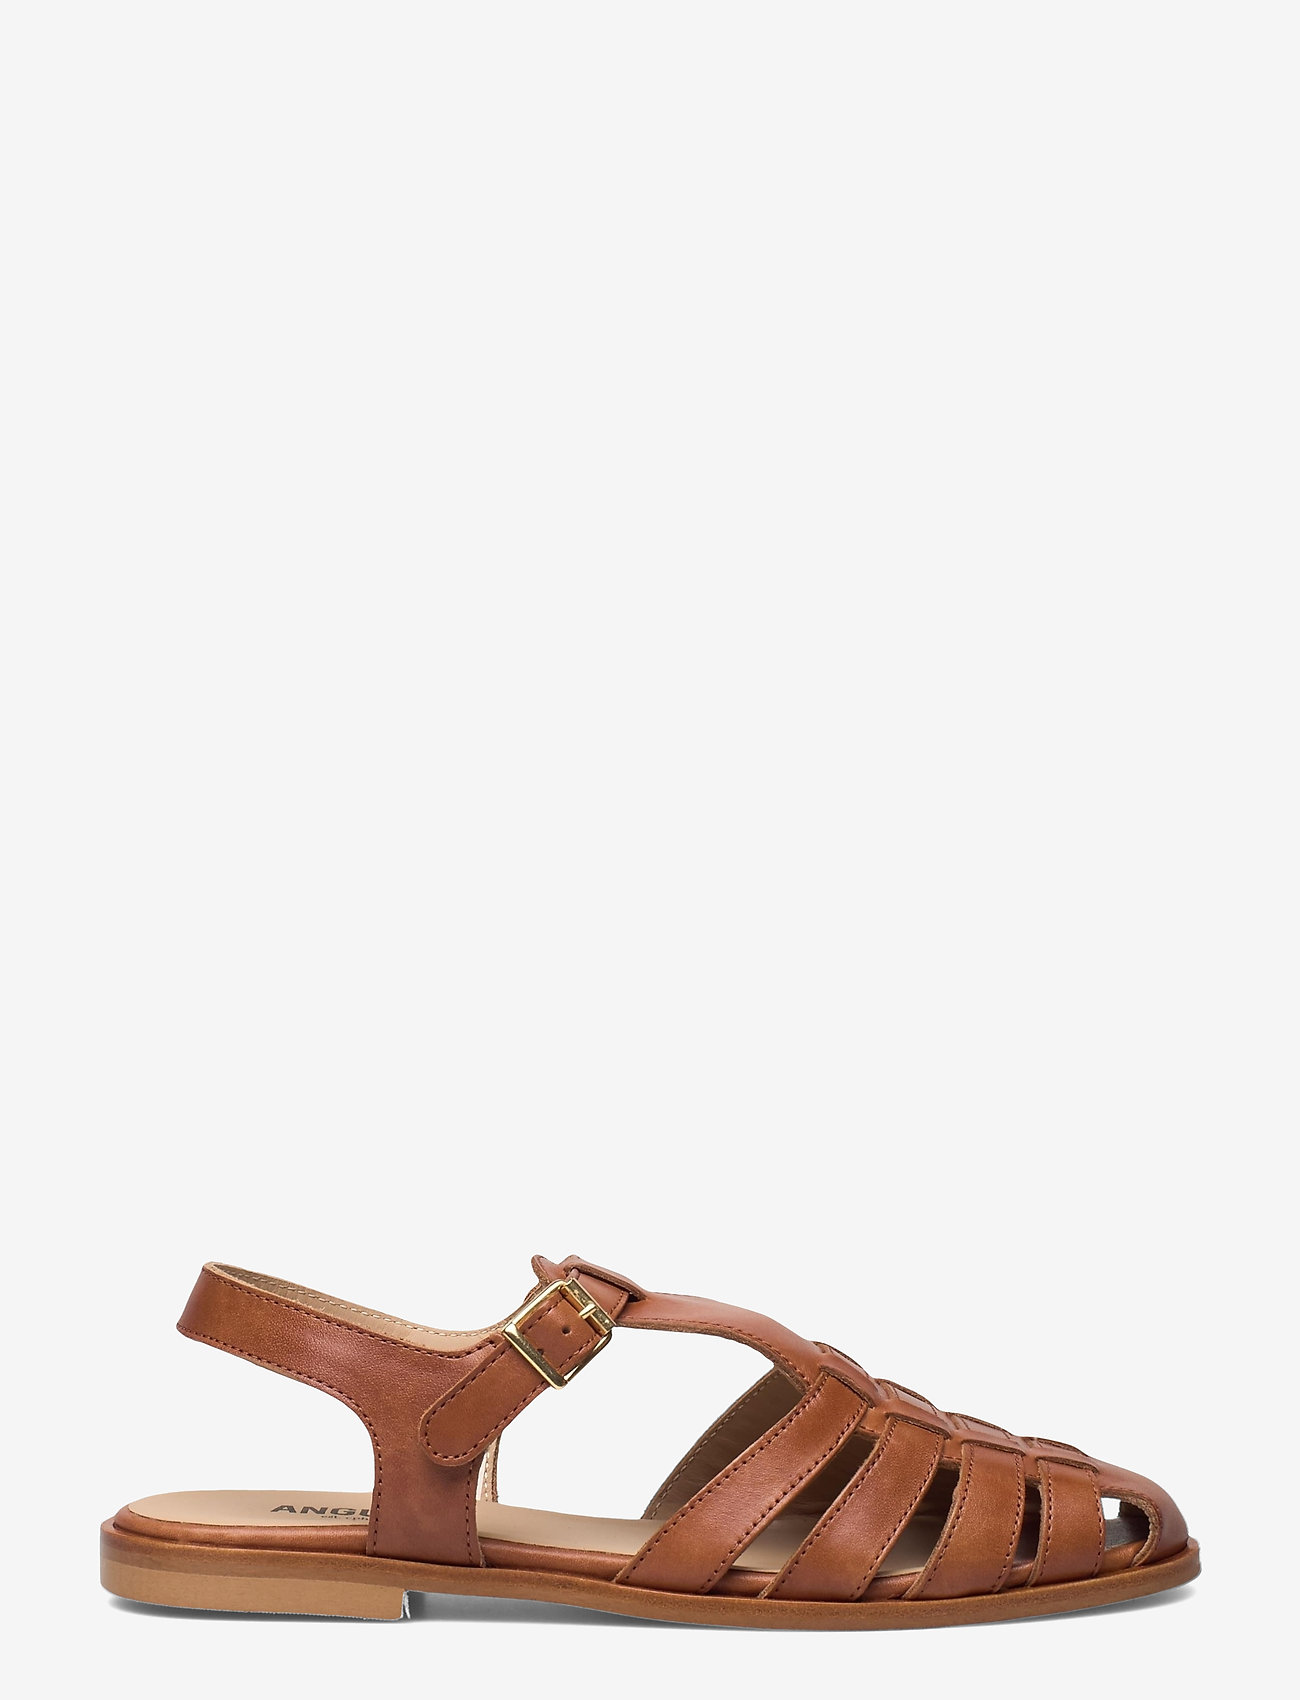 ANGULUS - Sandals - flat - closed toe - op - flat sandals - 1789 tan - 1